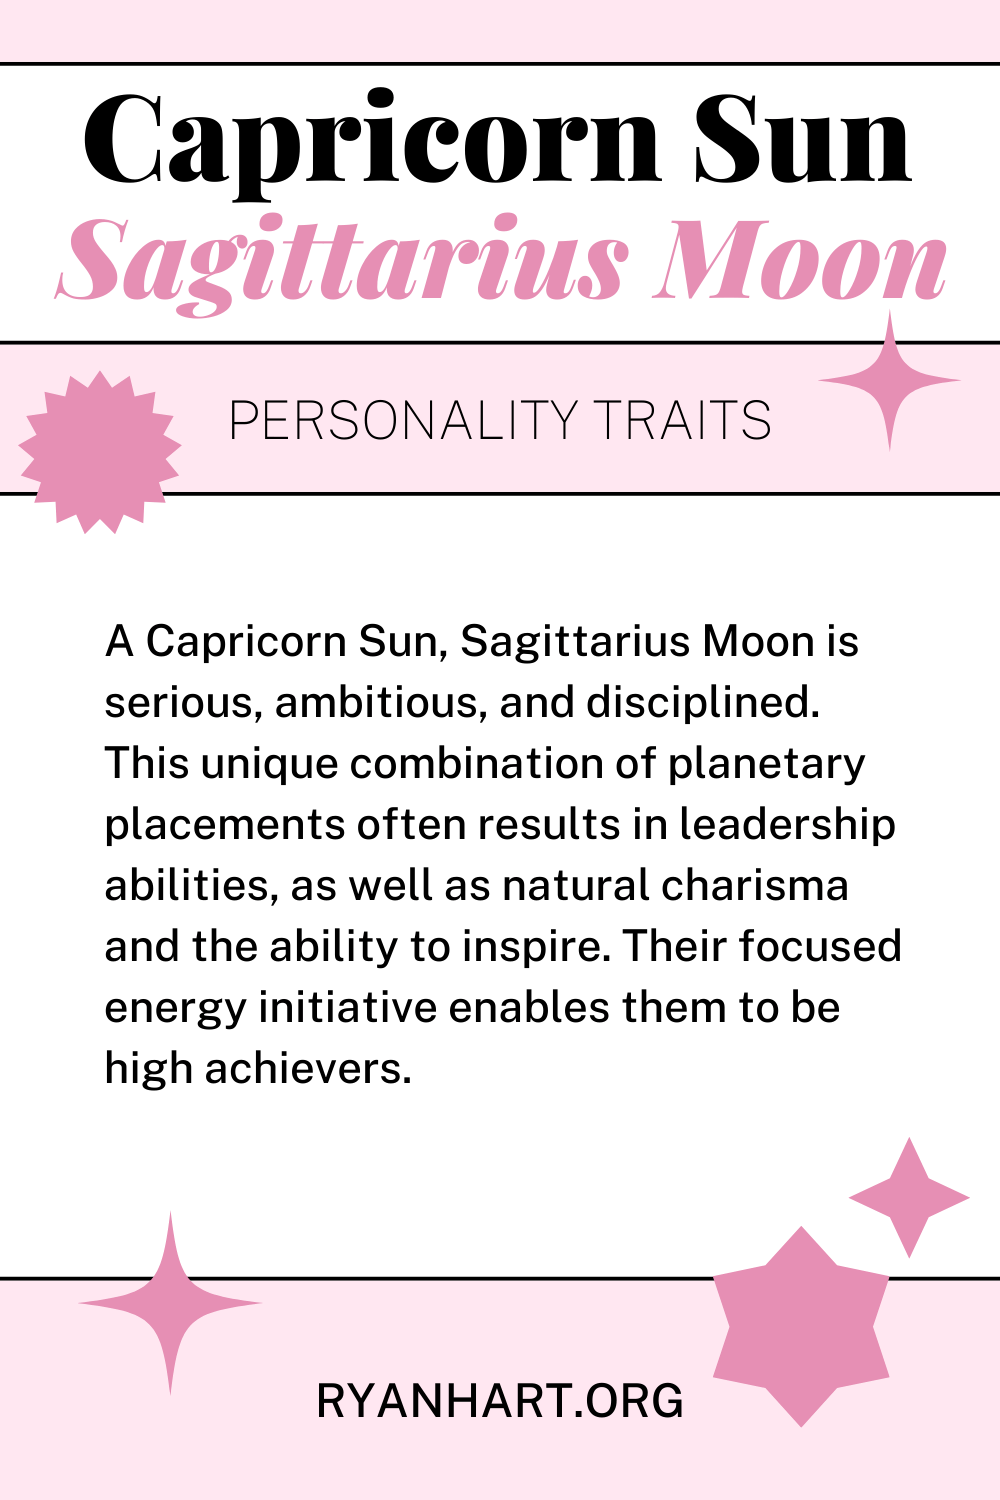 Capricorn Sun Sagittarius Moon Description